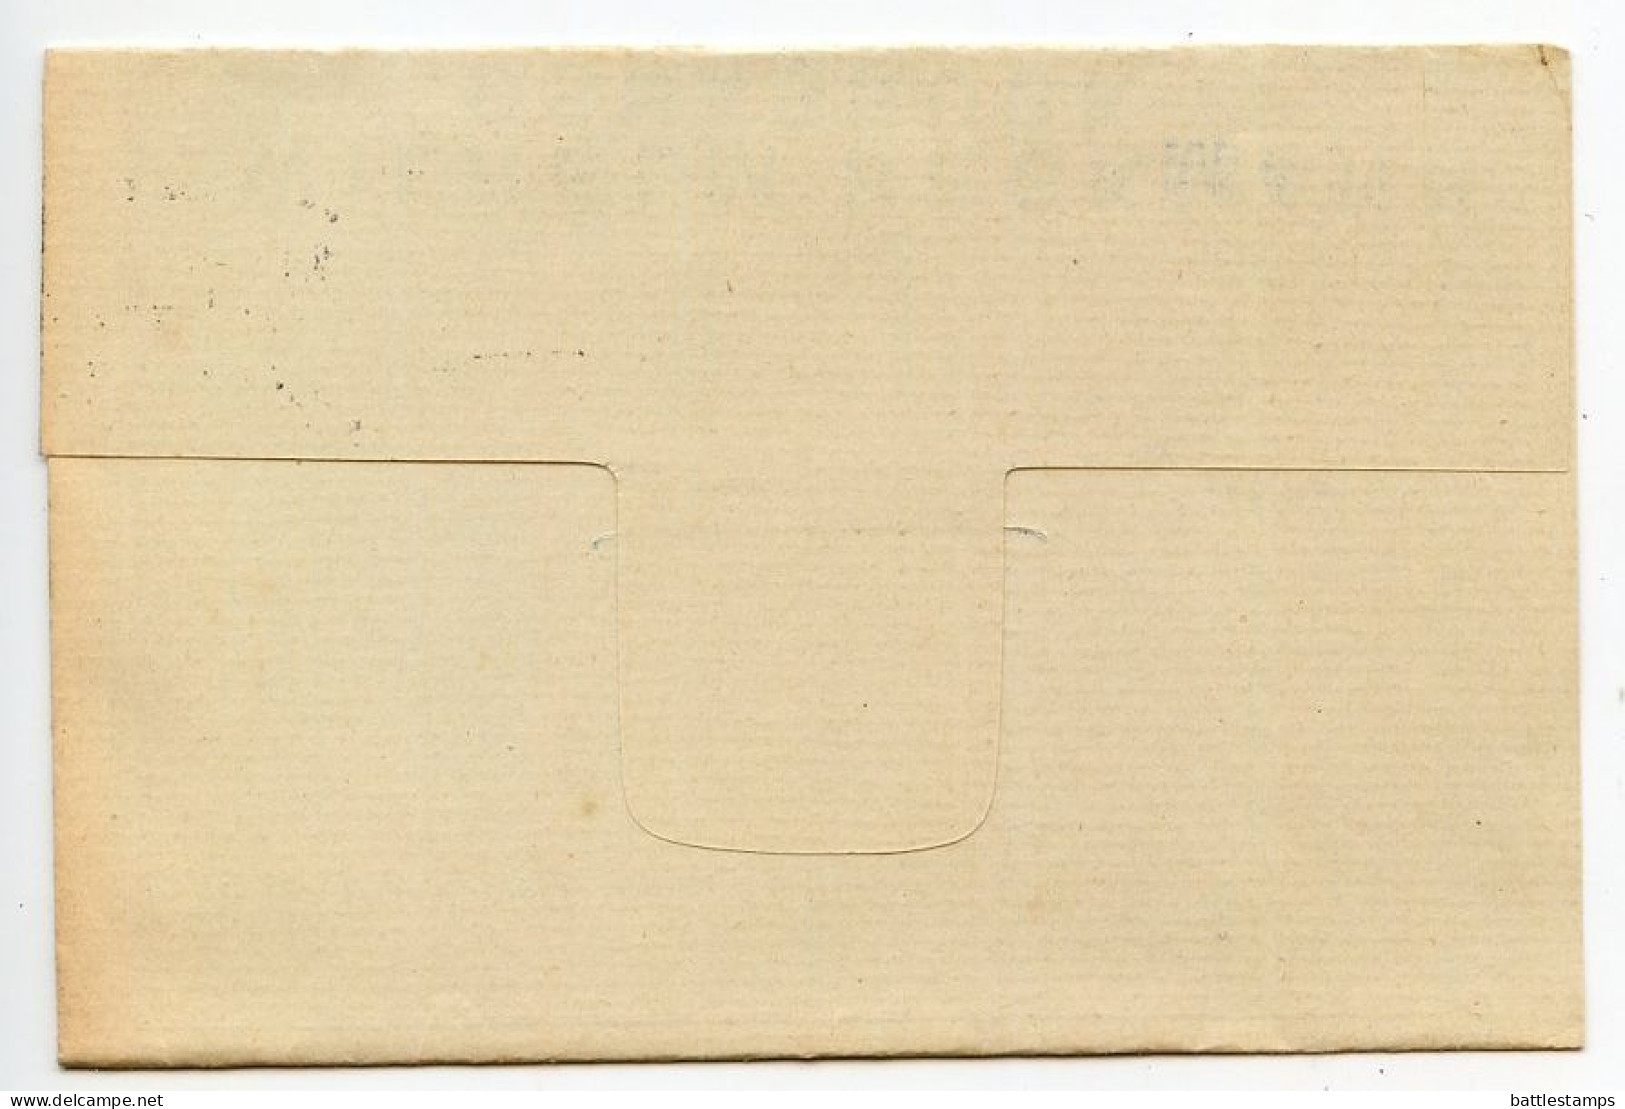 Germany 1937 Folded Zahlkarte & Invoice; Osnabrück - F. Wilhelm Beckmann; 3pf. Hindenburg; Telephone Slogan Cancel - Brieven En Documenten